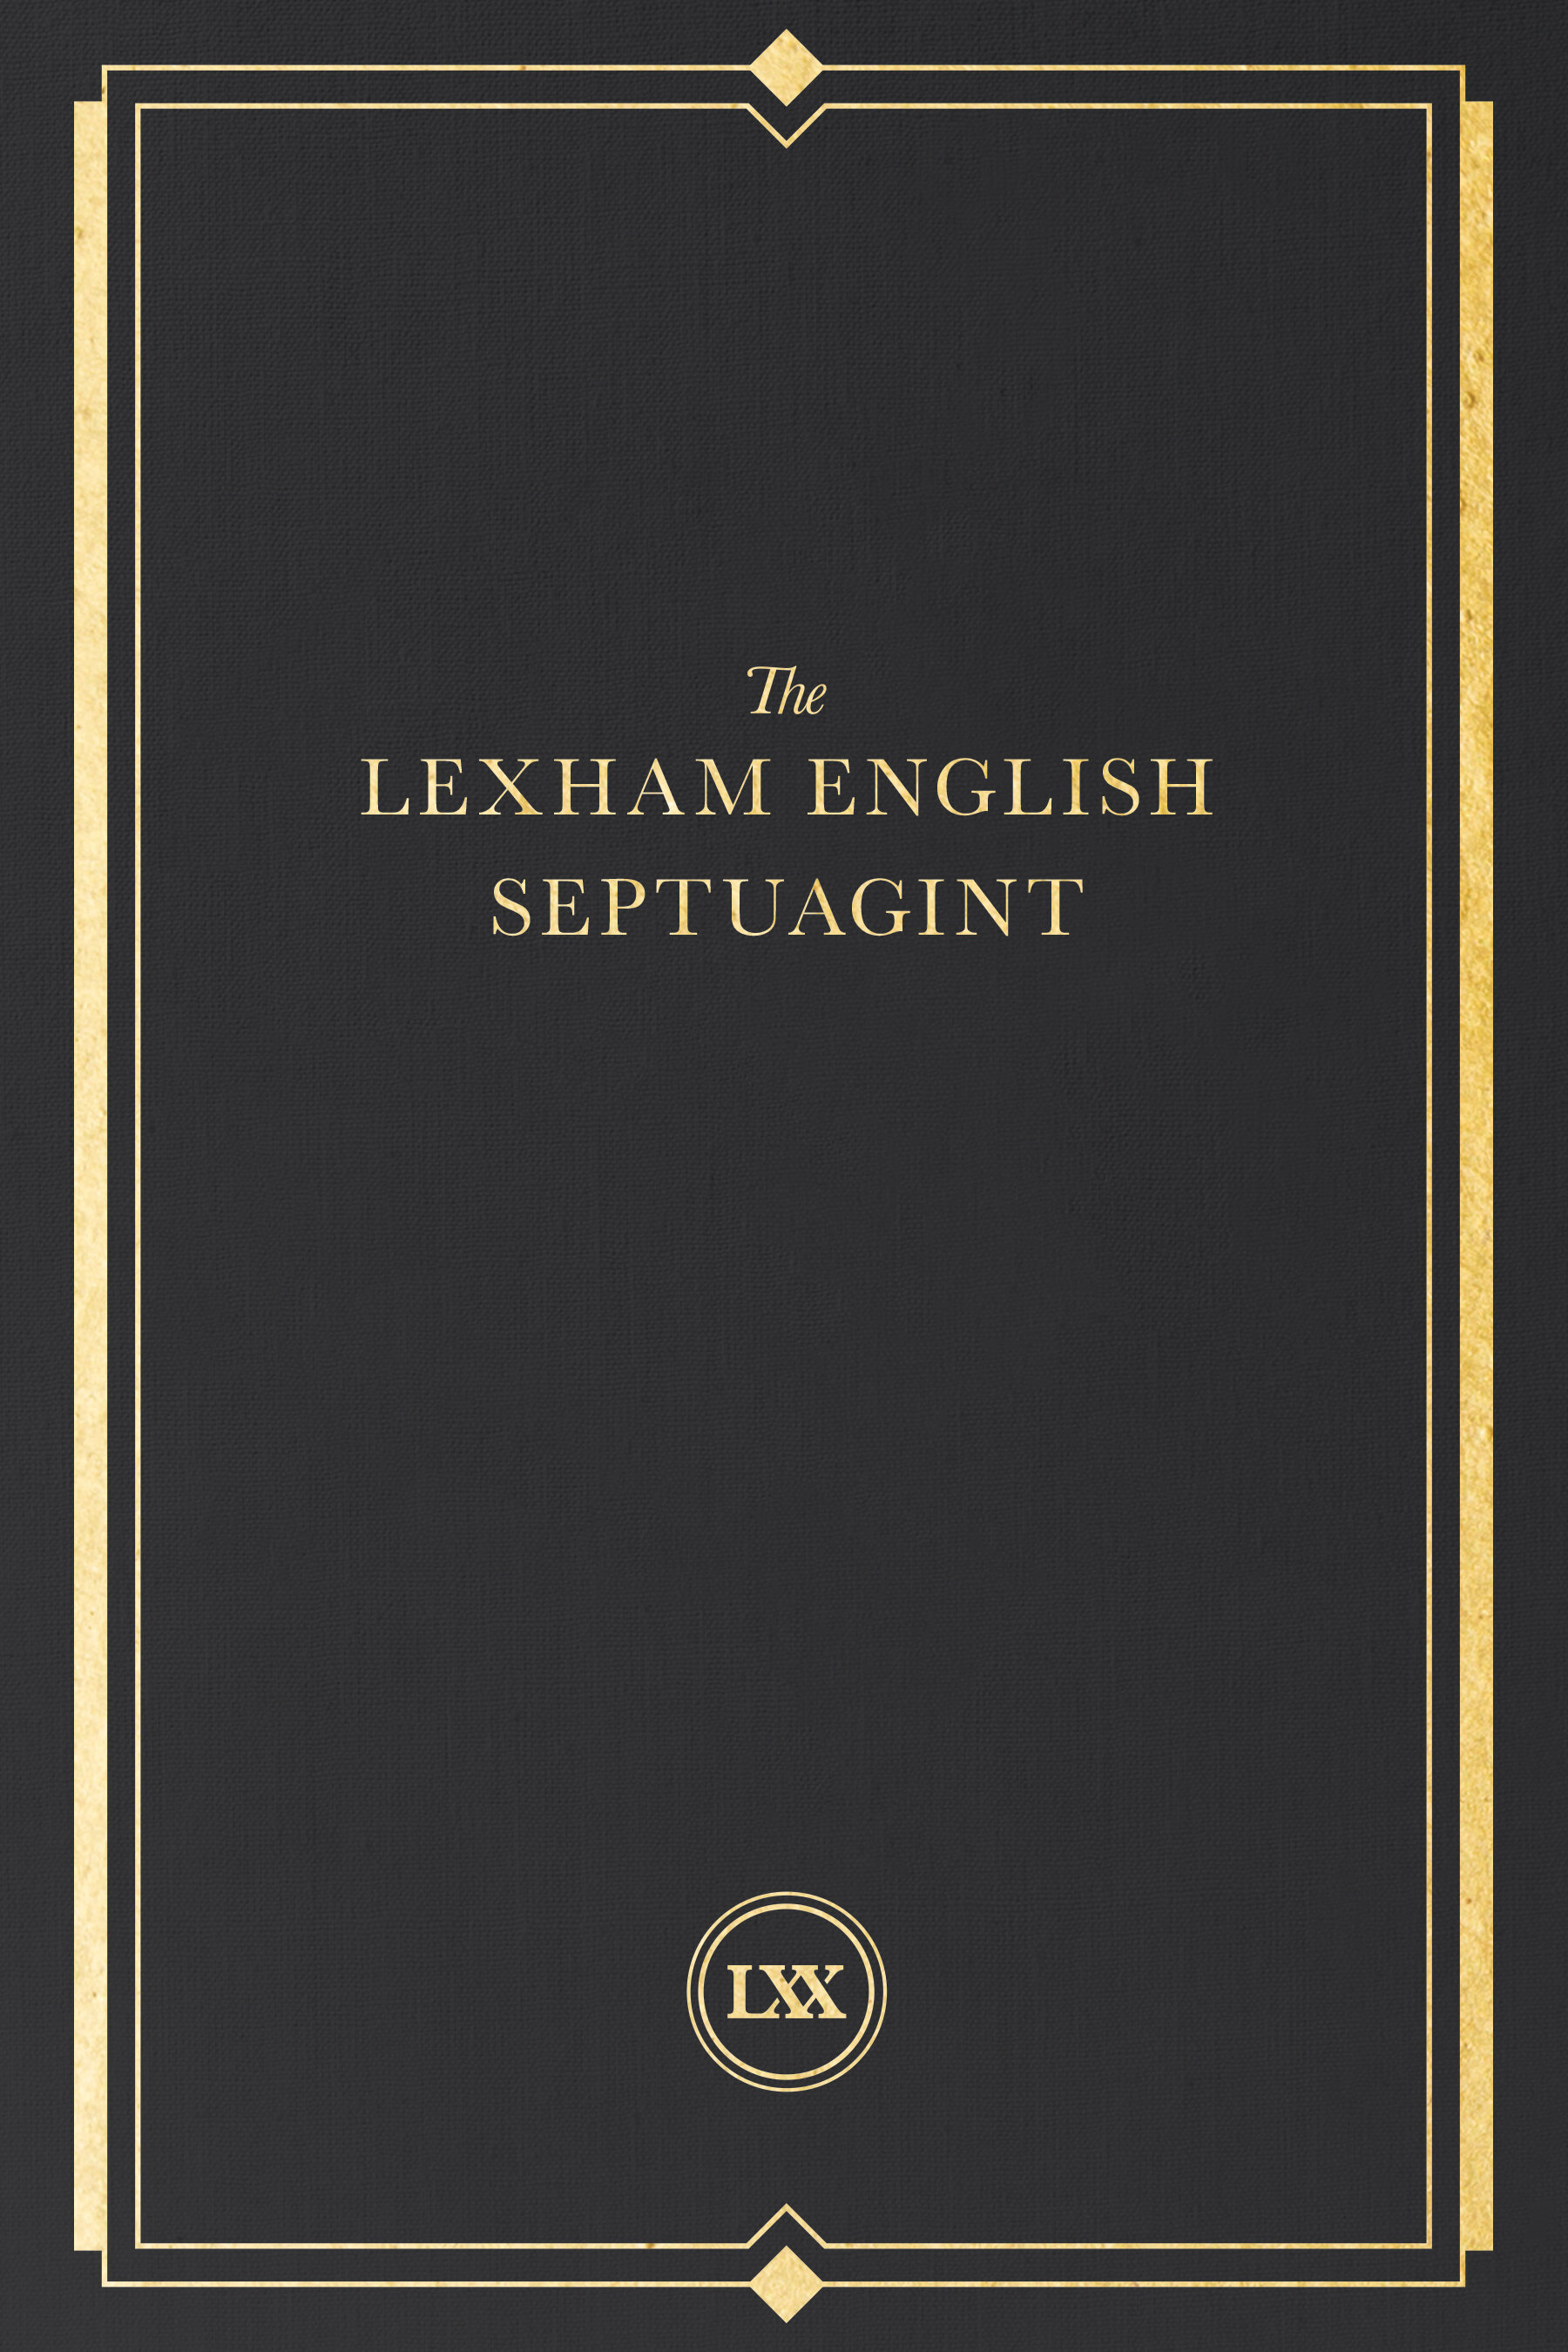 The Lexham English Septuagint, 2nd ed. (LES)